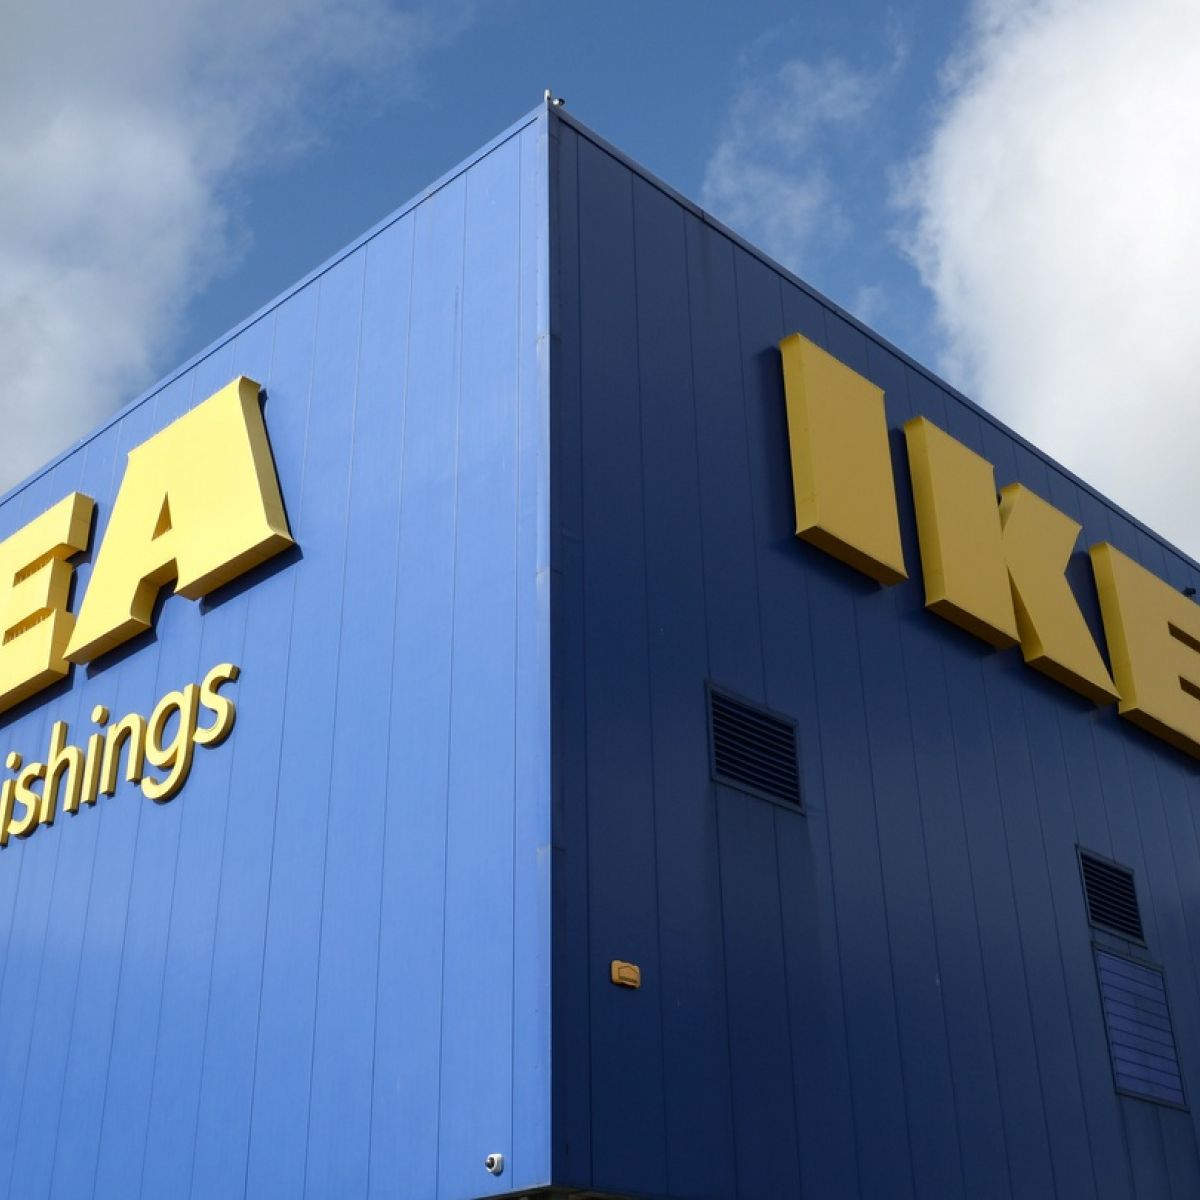 Ikea Rejigs Ireland And Britain Management Structure